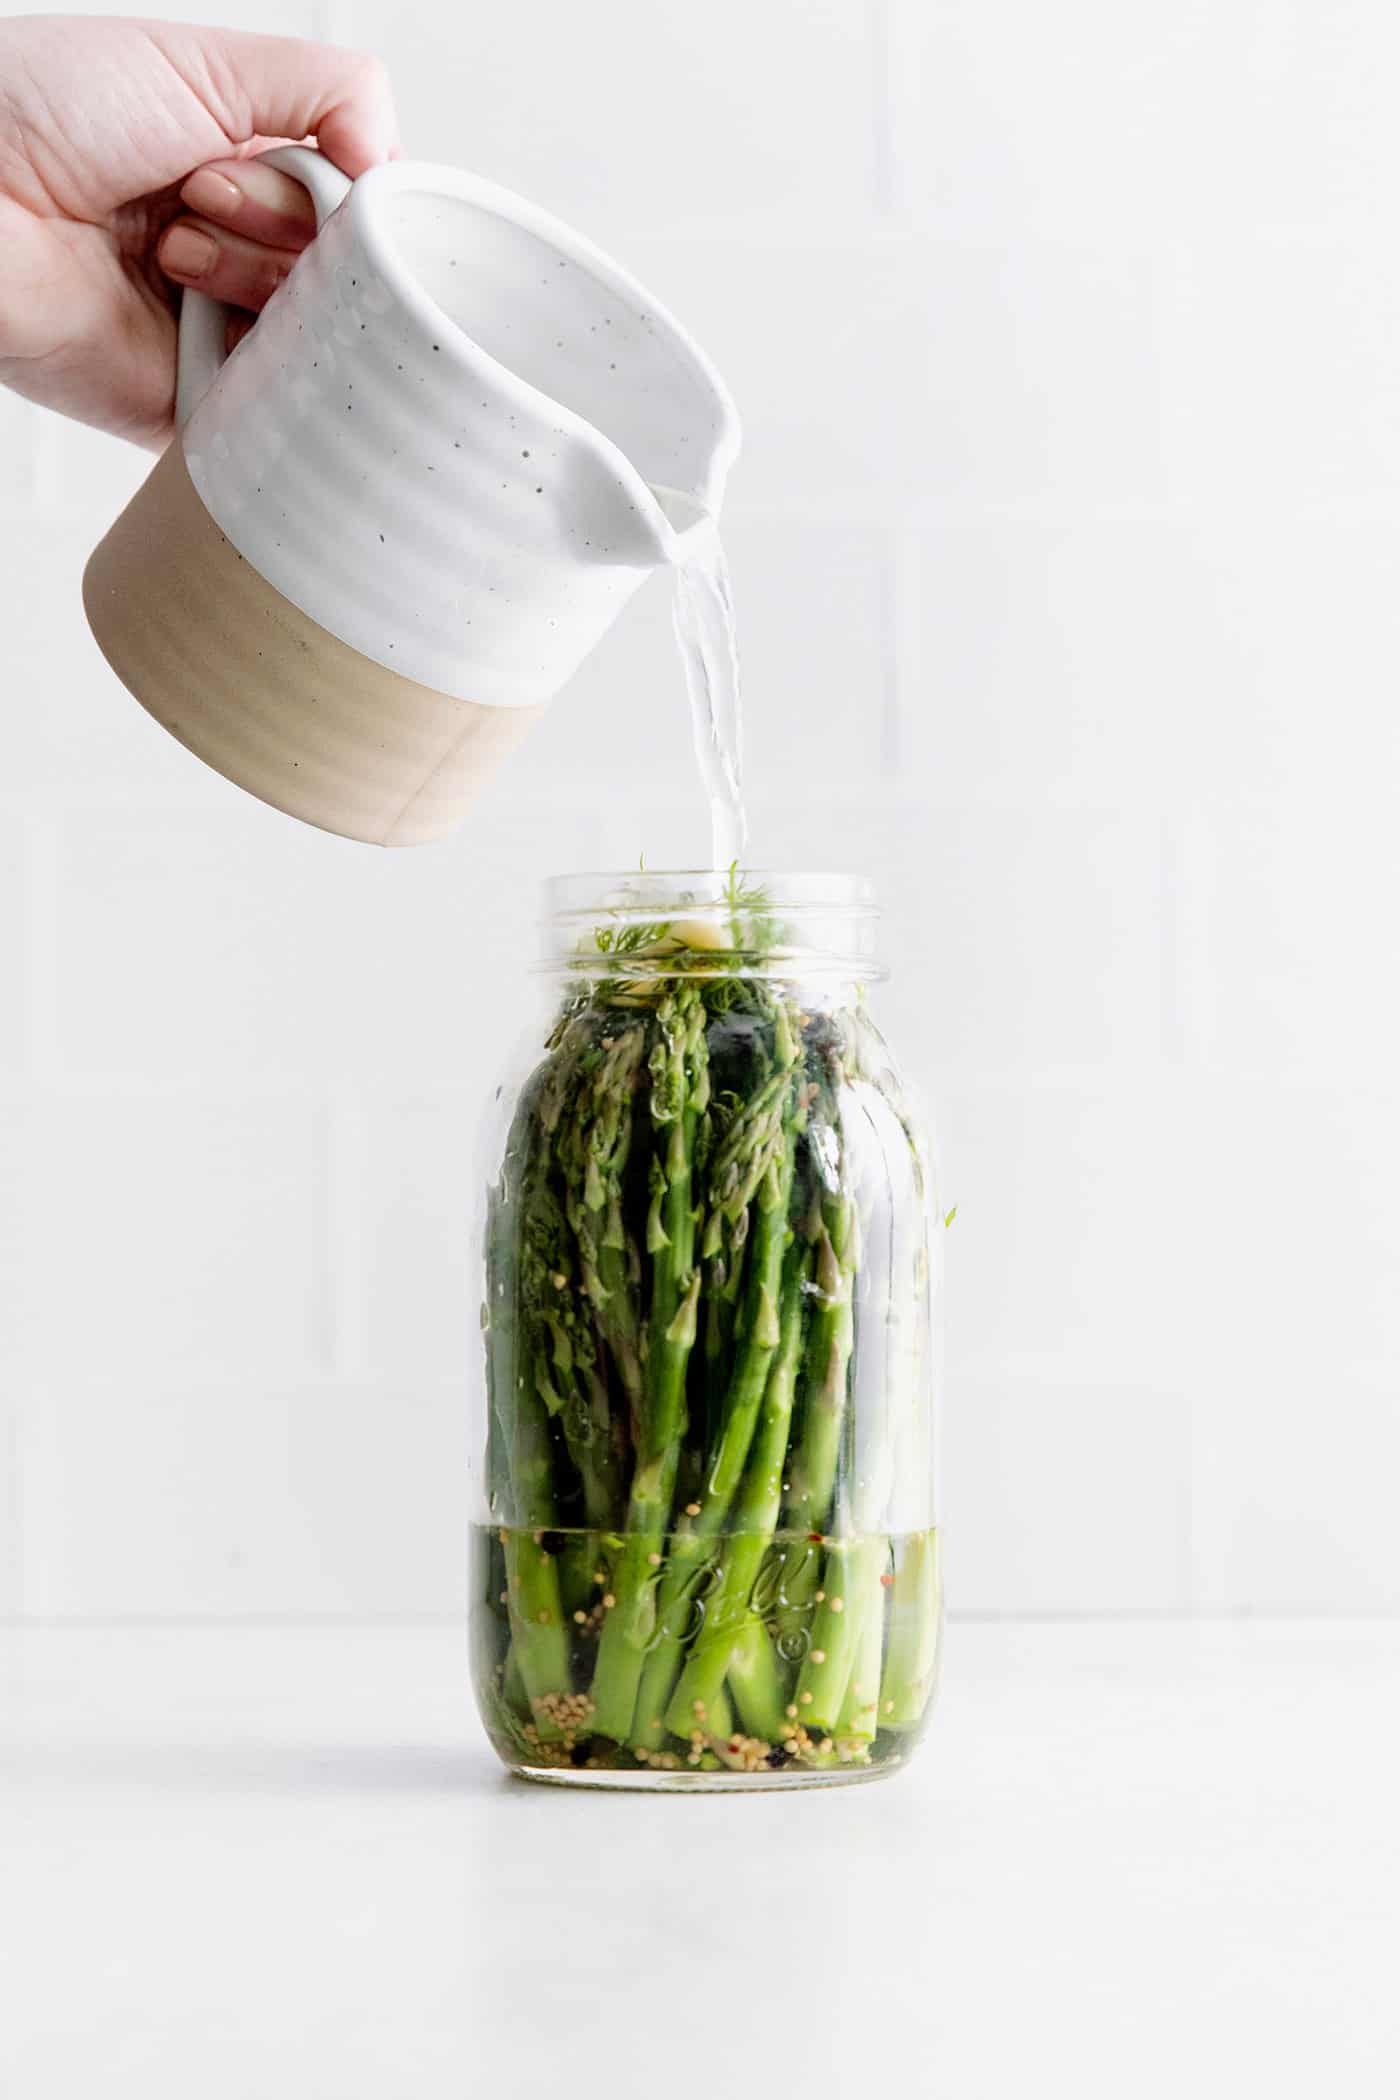 Pickling brine being poured over a jar of asparagus